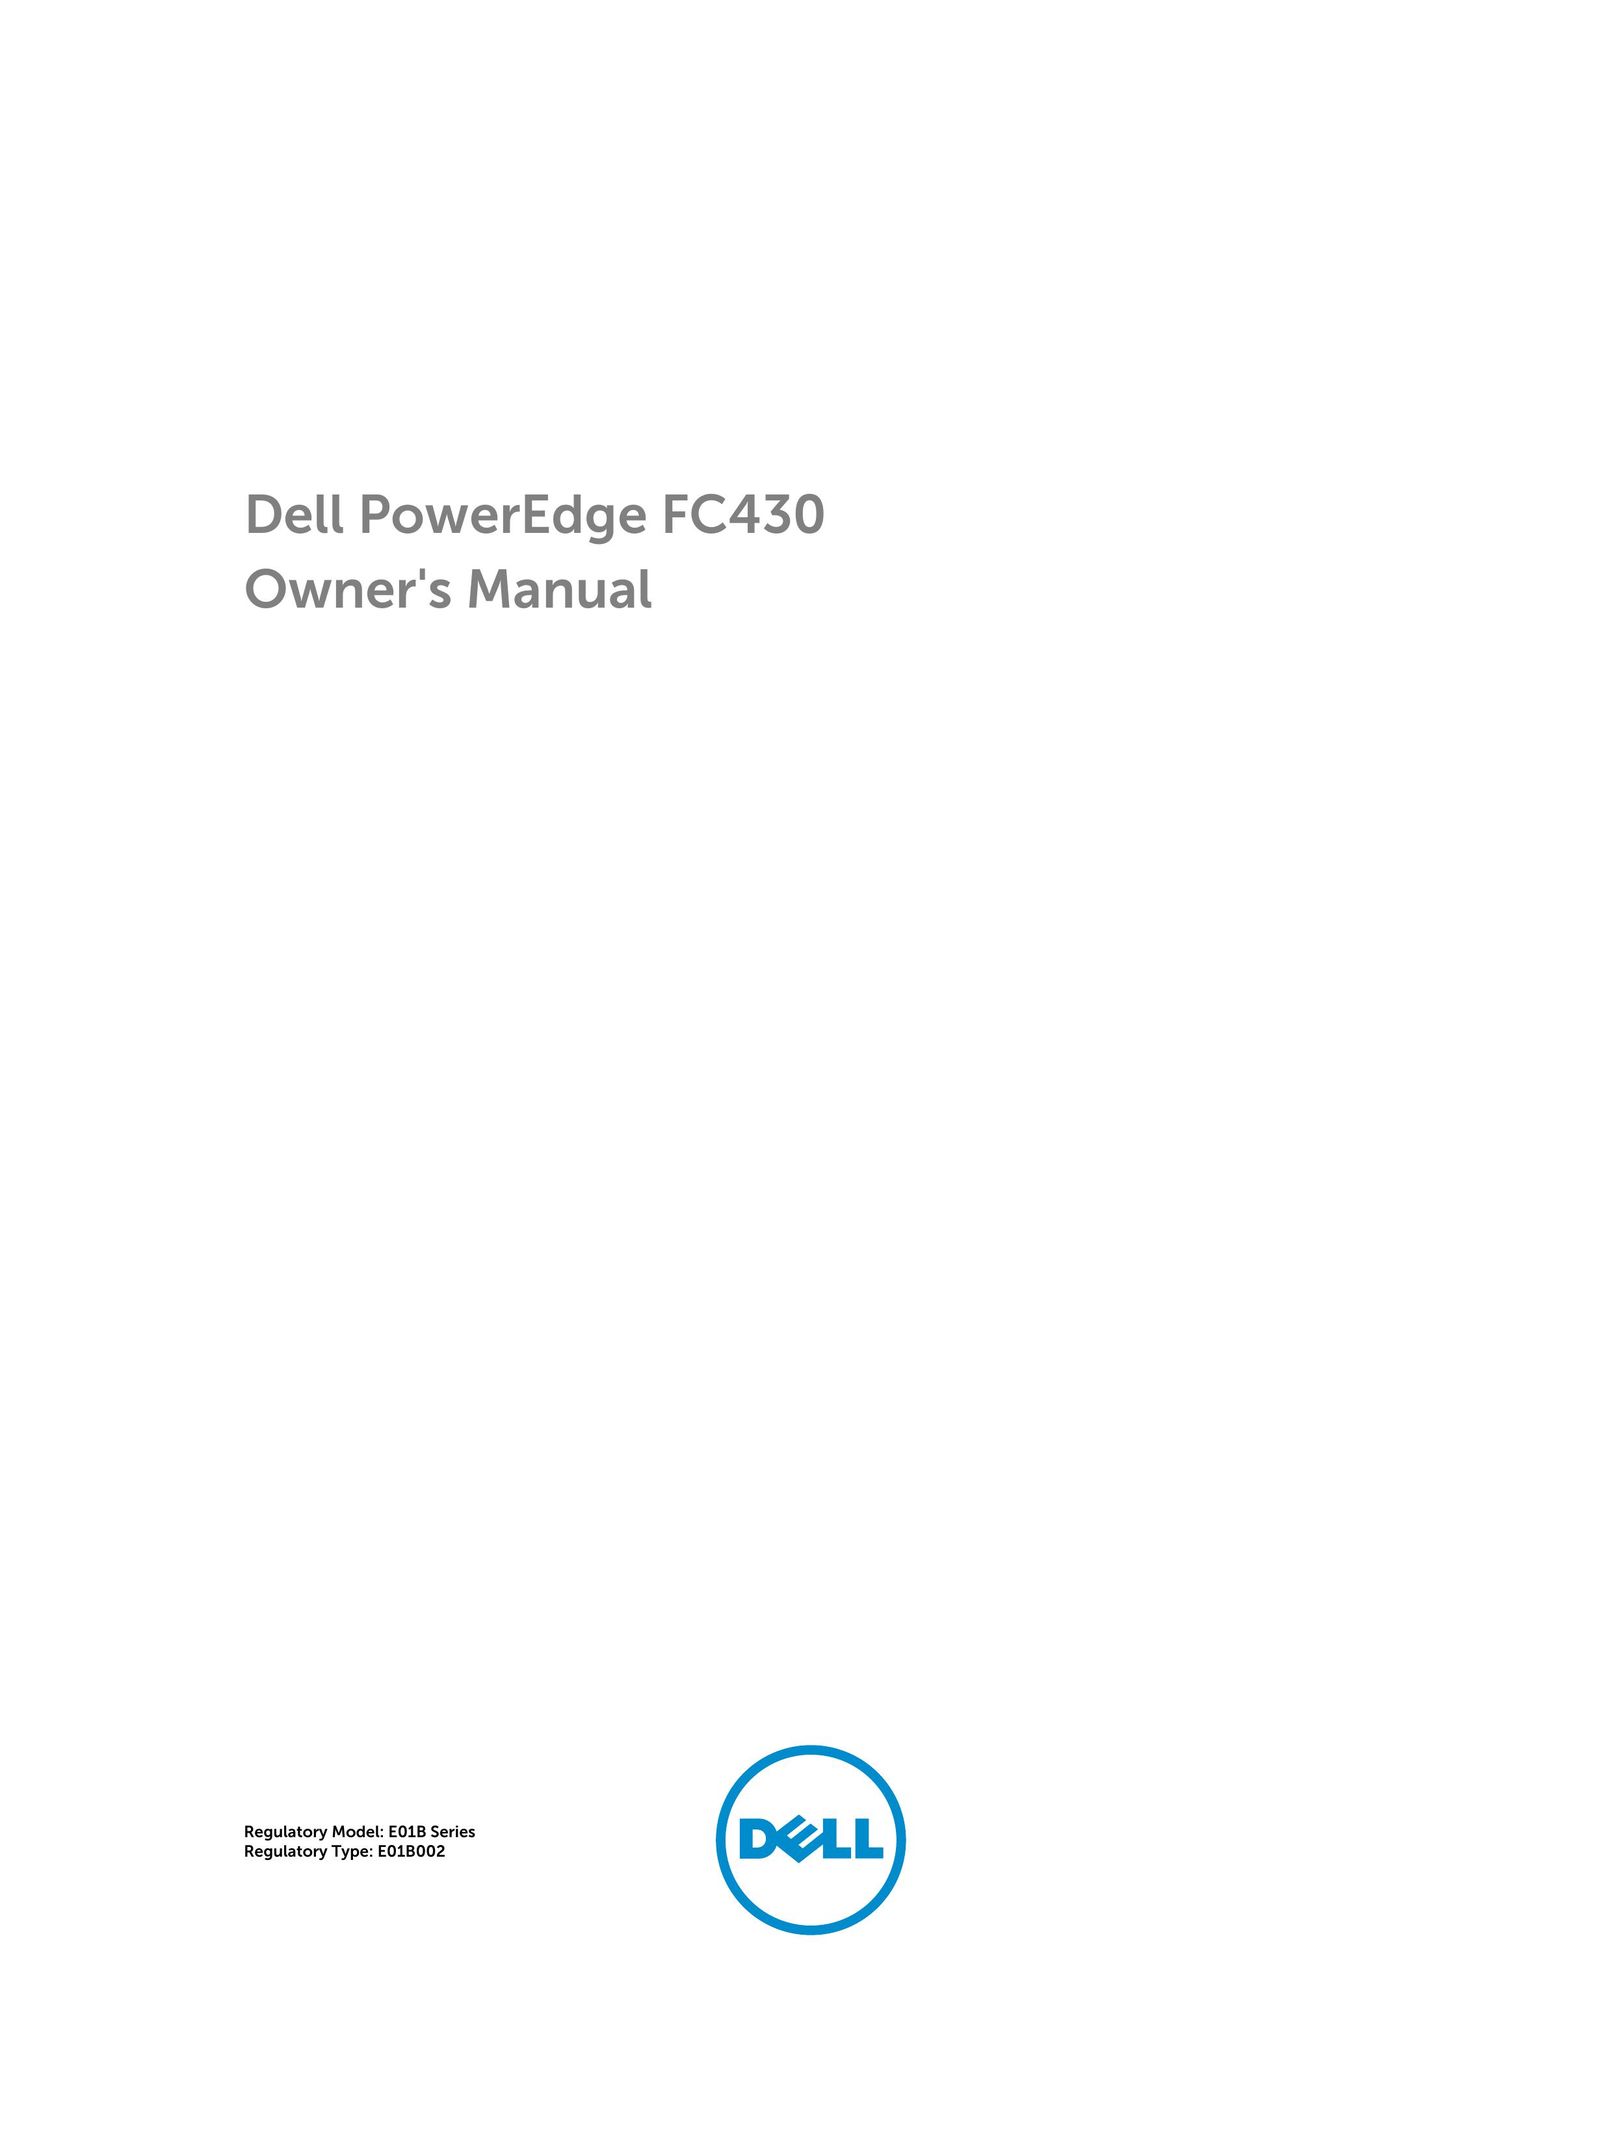 Dell FC430 Home Theater Server User Manual